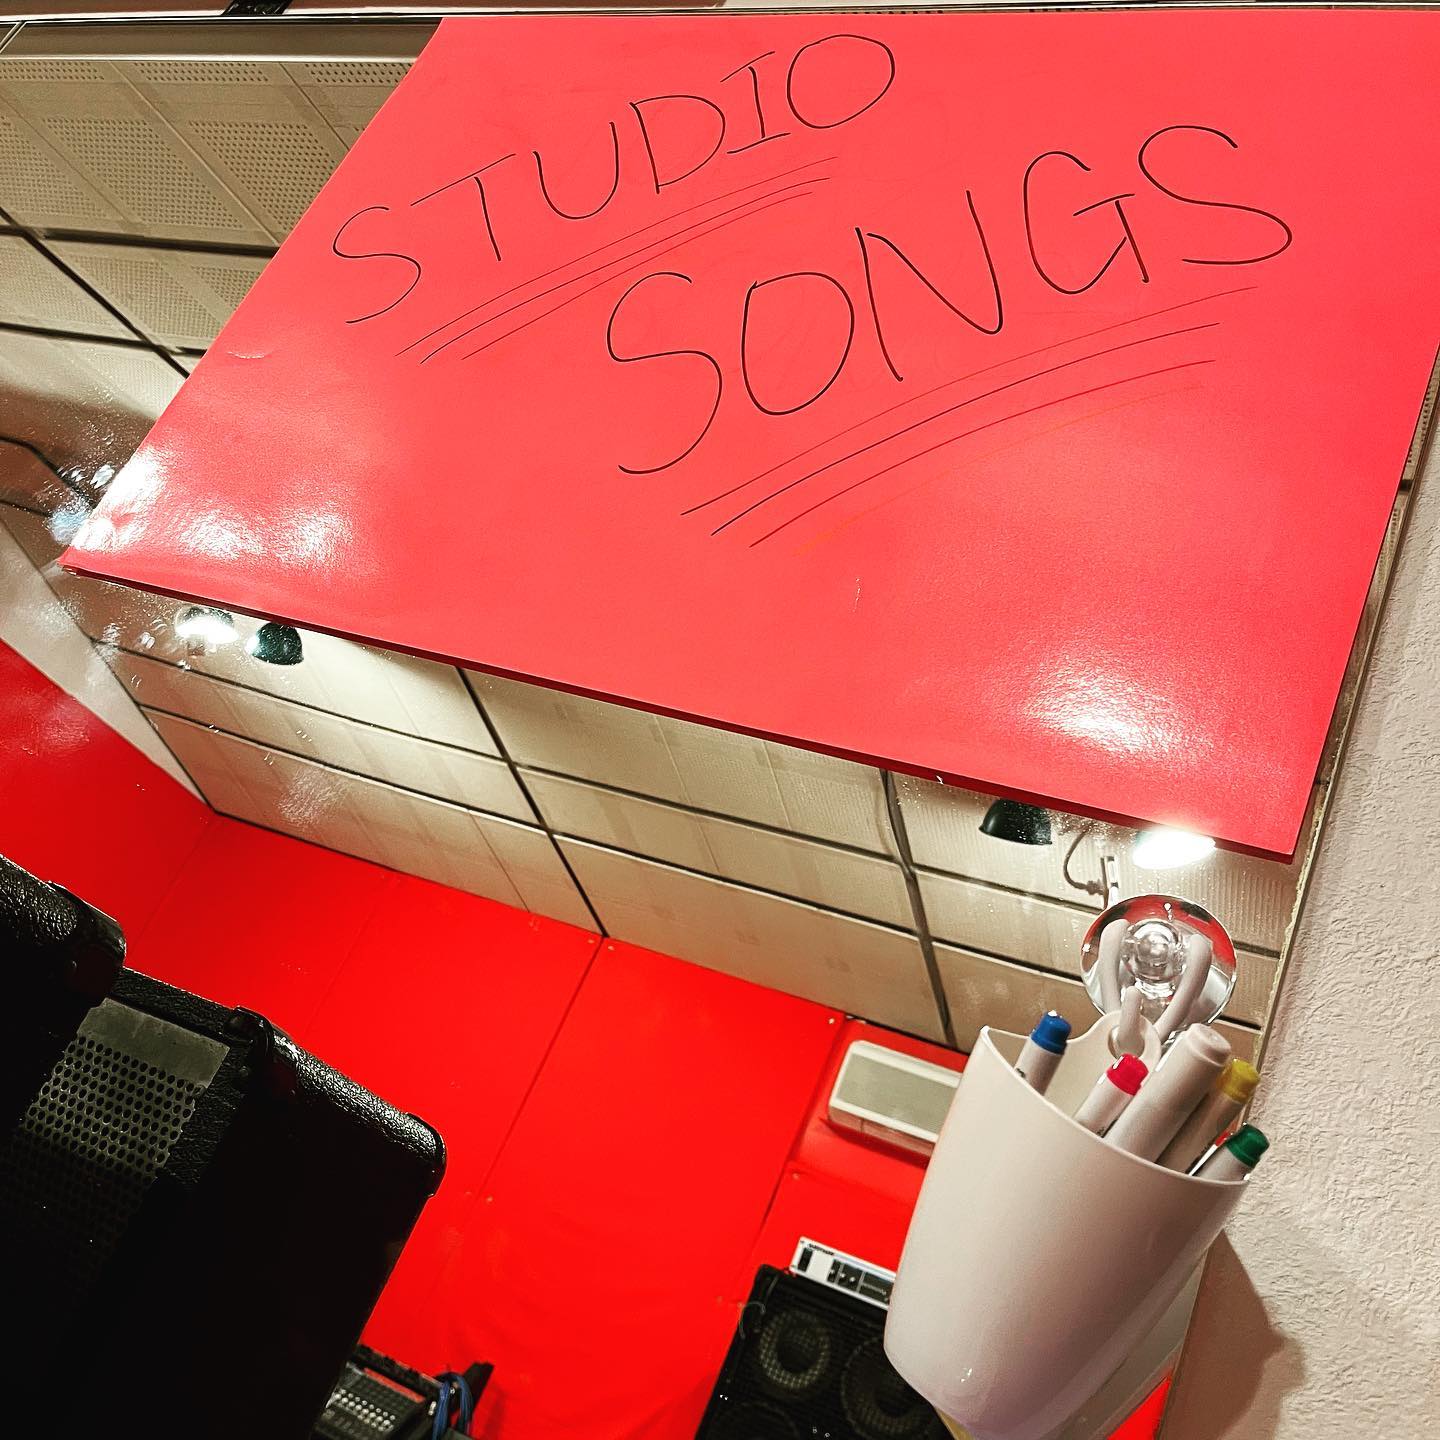 Cスタジオの鏡にピンクのホワイトボードを設置しました。ライブのセットリストの打ち合わせなど様々な用途でお使いいただけます。ご自由にお使いください。#STUDIOSONGS #スタジオソングス #音楽スタジオ #musicstudio #ホワイトボード #ピンクのホワイトボード #打ち合わせ #名古屋 #nagoya #名古屋市 #名古屋市千種区 #千種区 #chikusa #千種区新西 #千種区スタジオ #個人練習 #バンド練習 #ネット予約 #音楽 #music #楽器#instrument #guitar #bass #drums #piano #vocals #keyboard